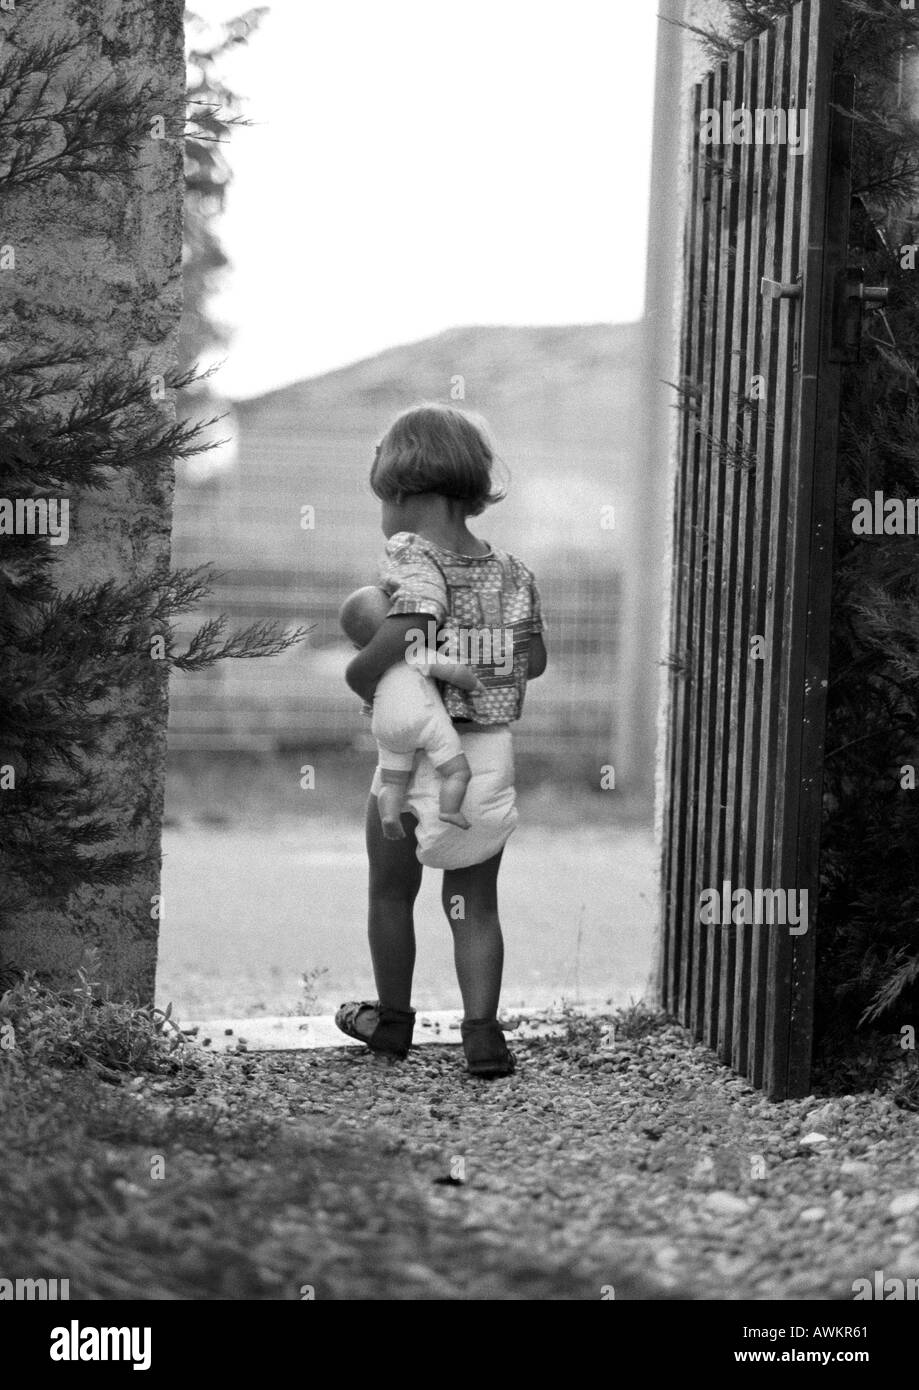 Little girl holding baby doll in gateway, rear view, b&w Stock Photo